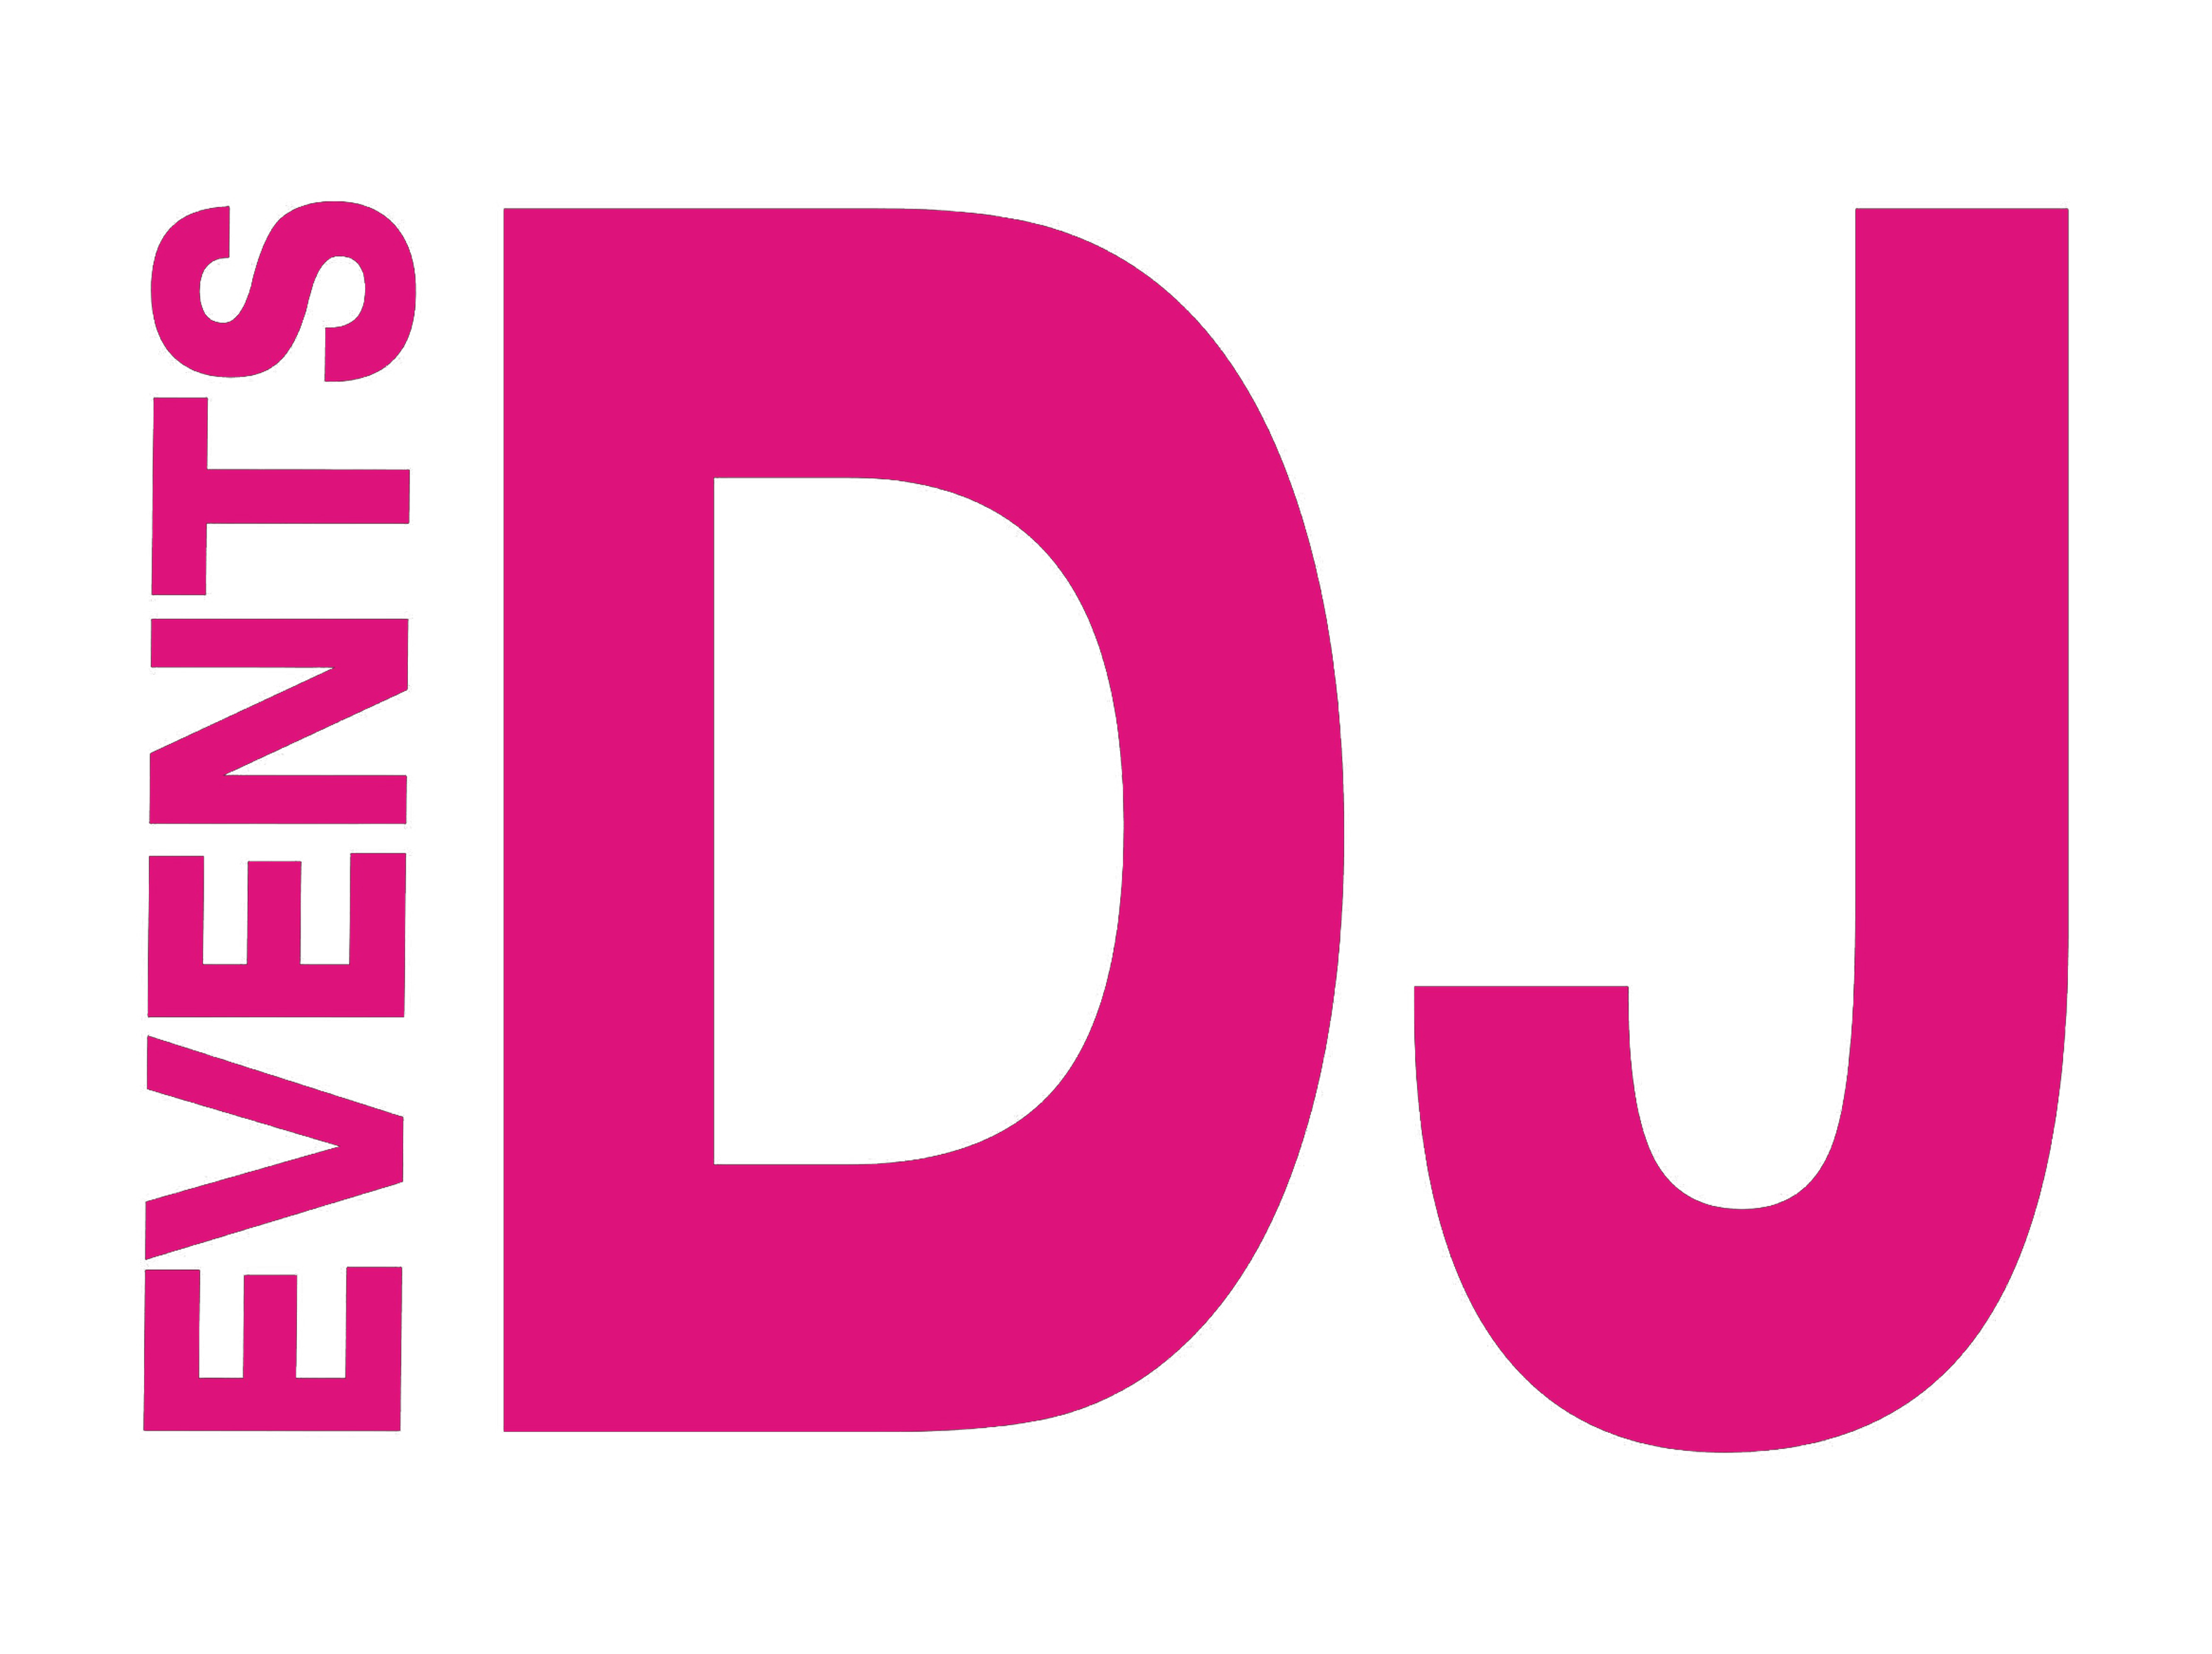 Events Dj logo